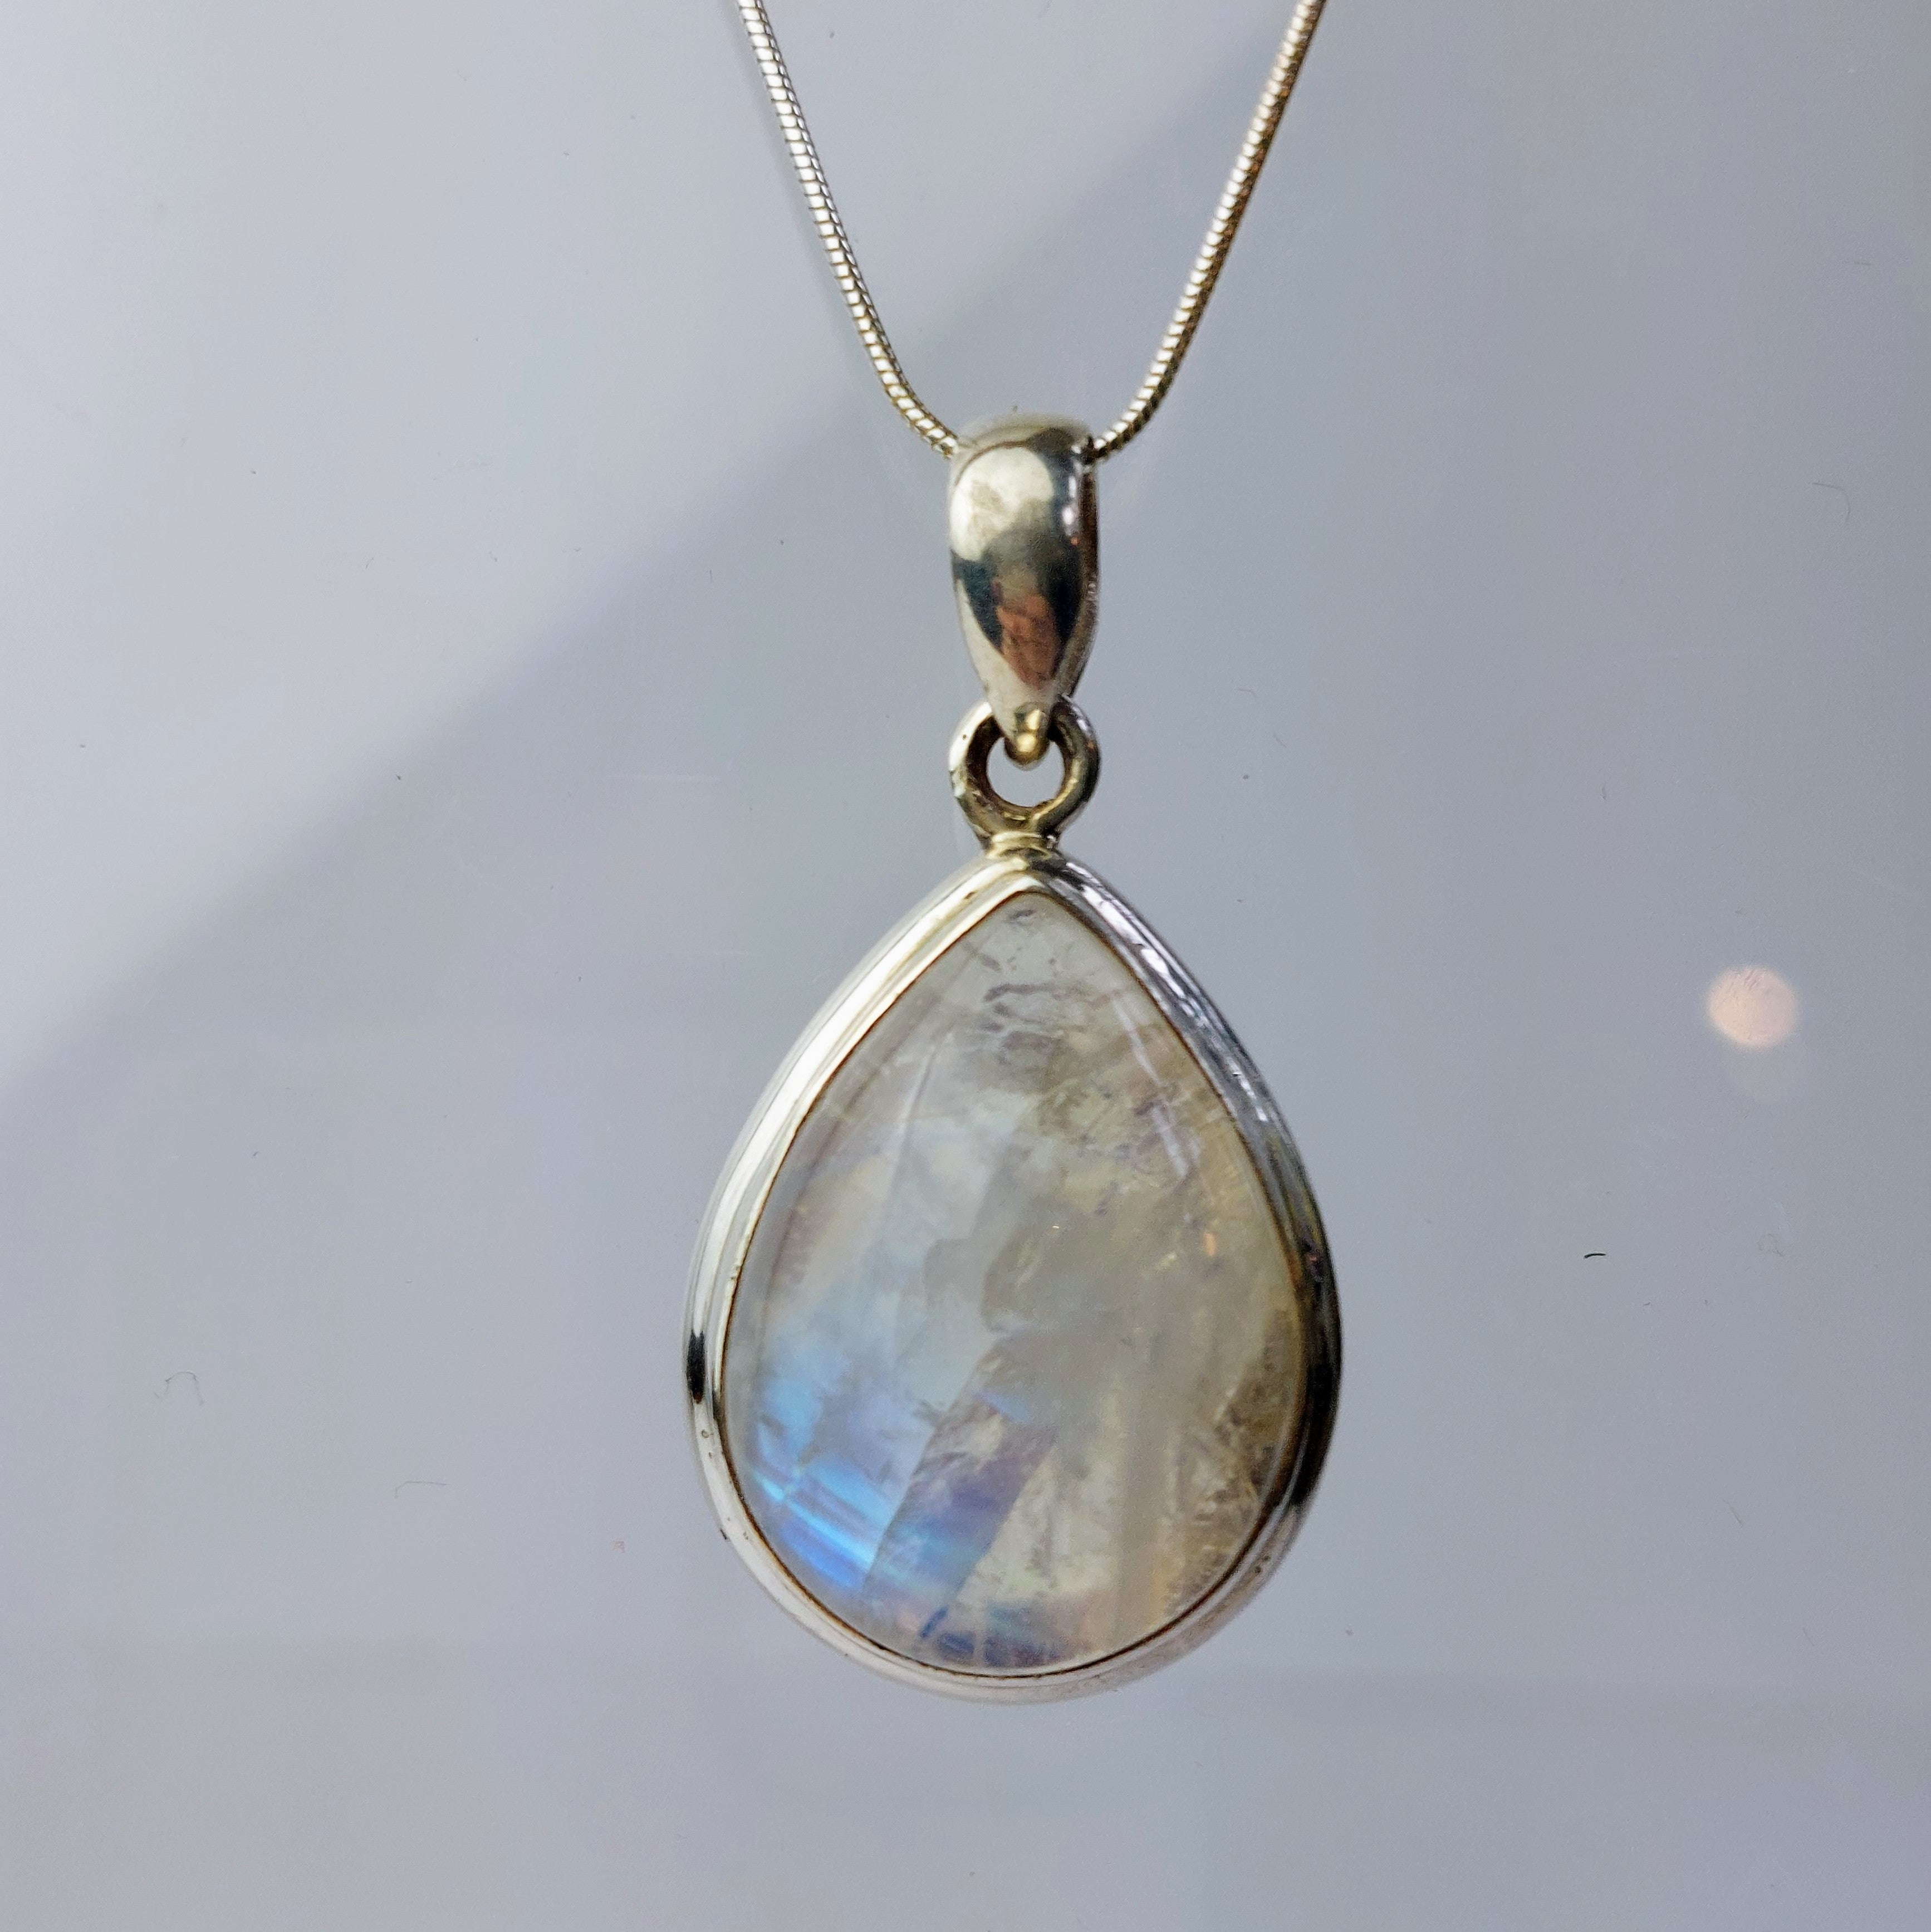 Large Teardrop Moonstone Pendant - The Nancy Smillie Shop - Art, Jewellery & Designer Gifts Glasgow